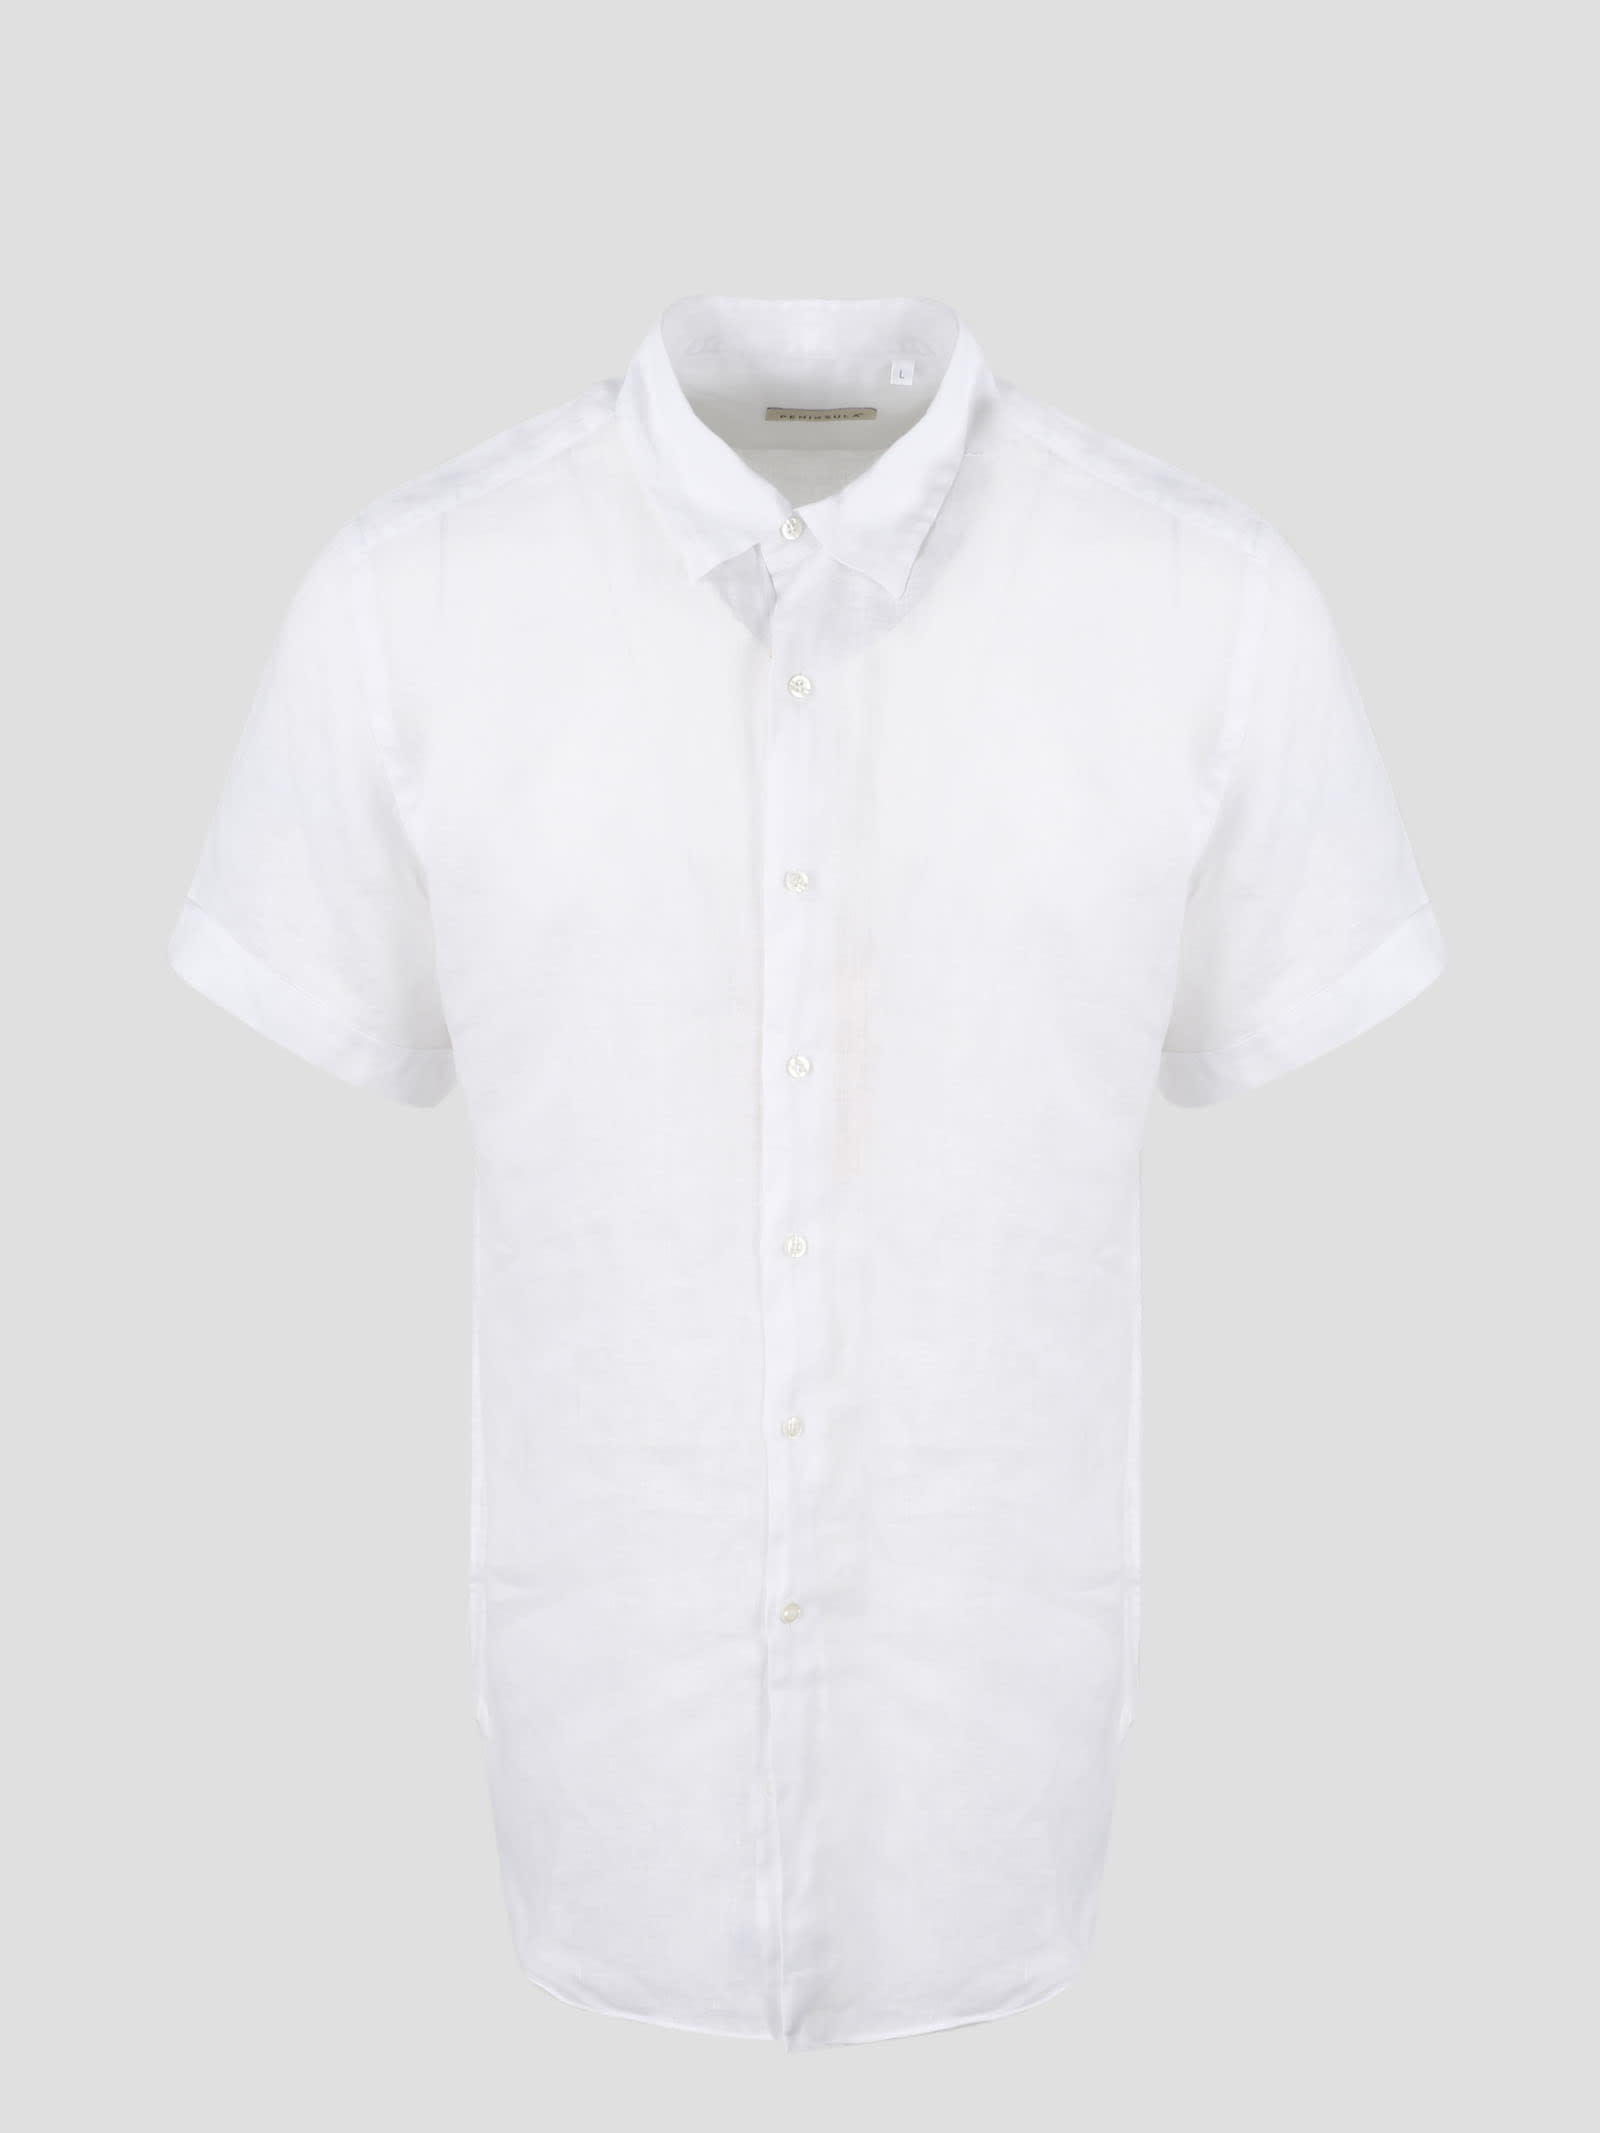 Peninsula Swimwear Linen Shirt